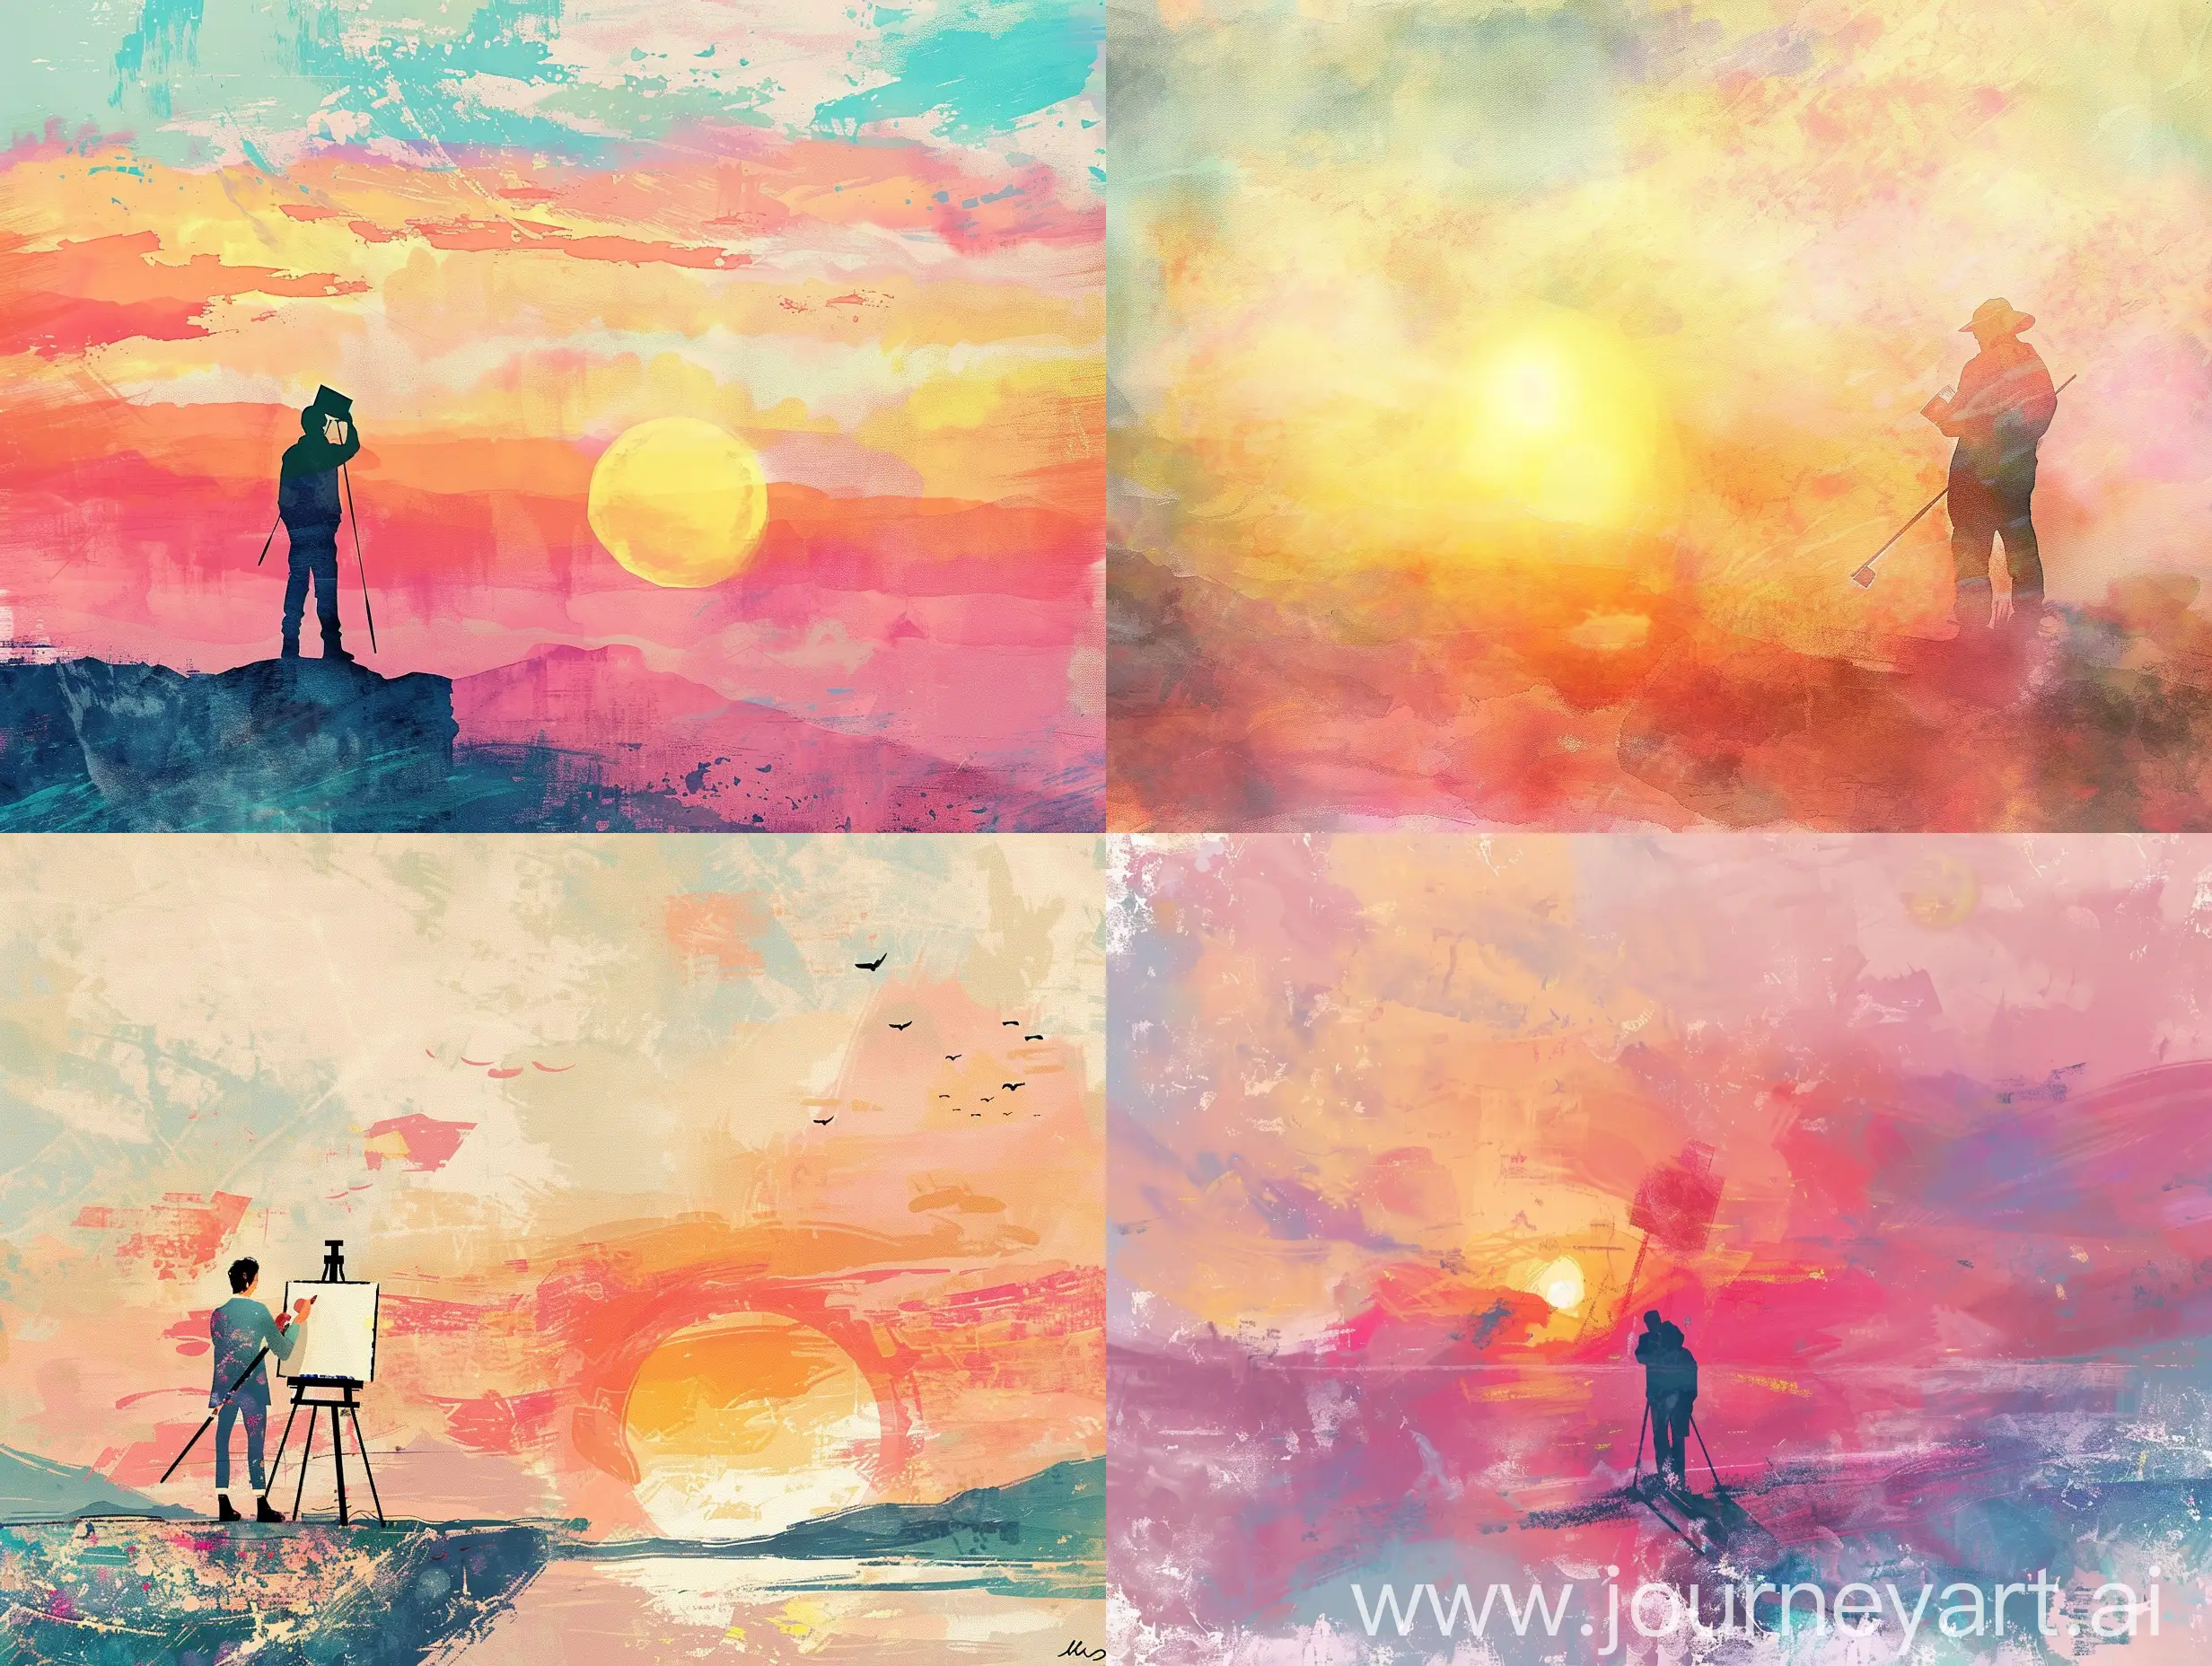 Painter capturing sunset, 
Digital illustration, contemporary era, pastel color palette with a watercolor texture effect.